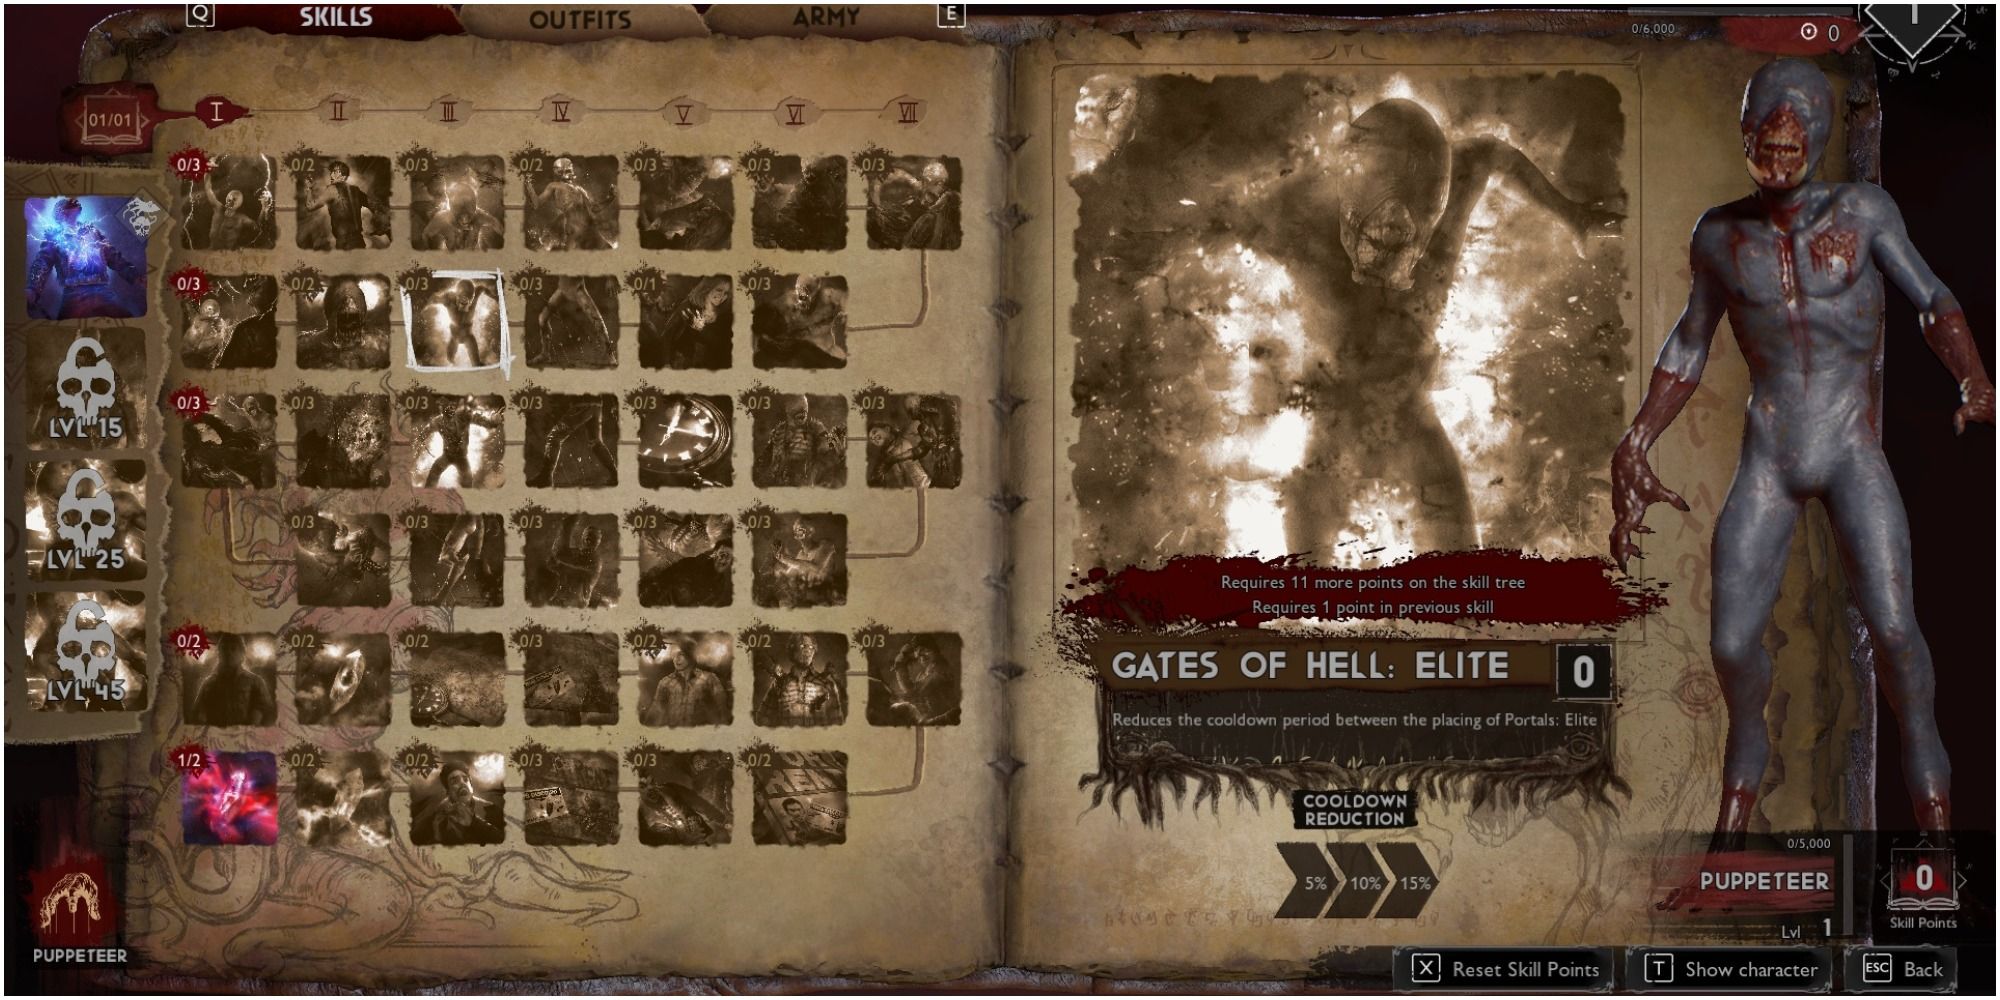 Evil Dead The Game Puppeteer Skill Gates Of Hell Elite Description